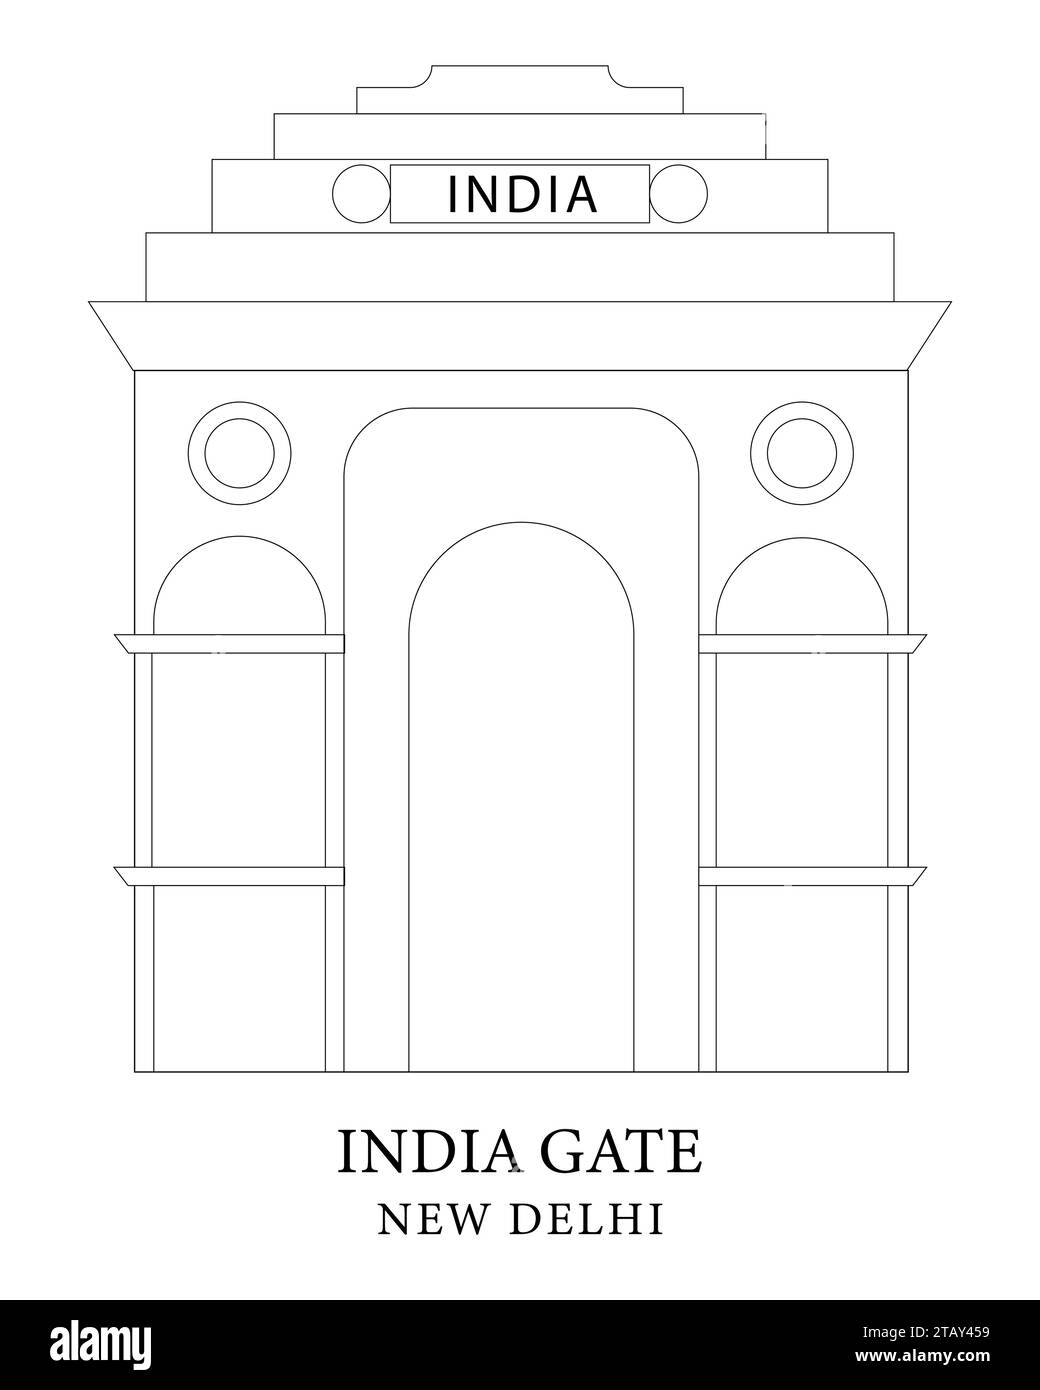 India gate vector illustration Stock Vector